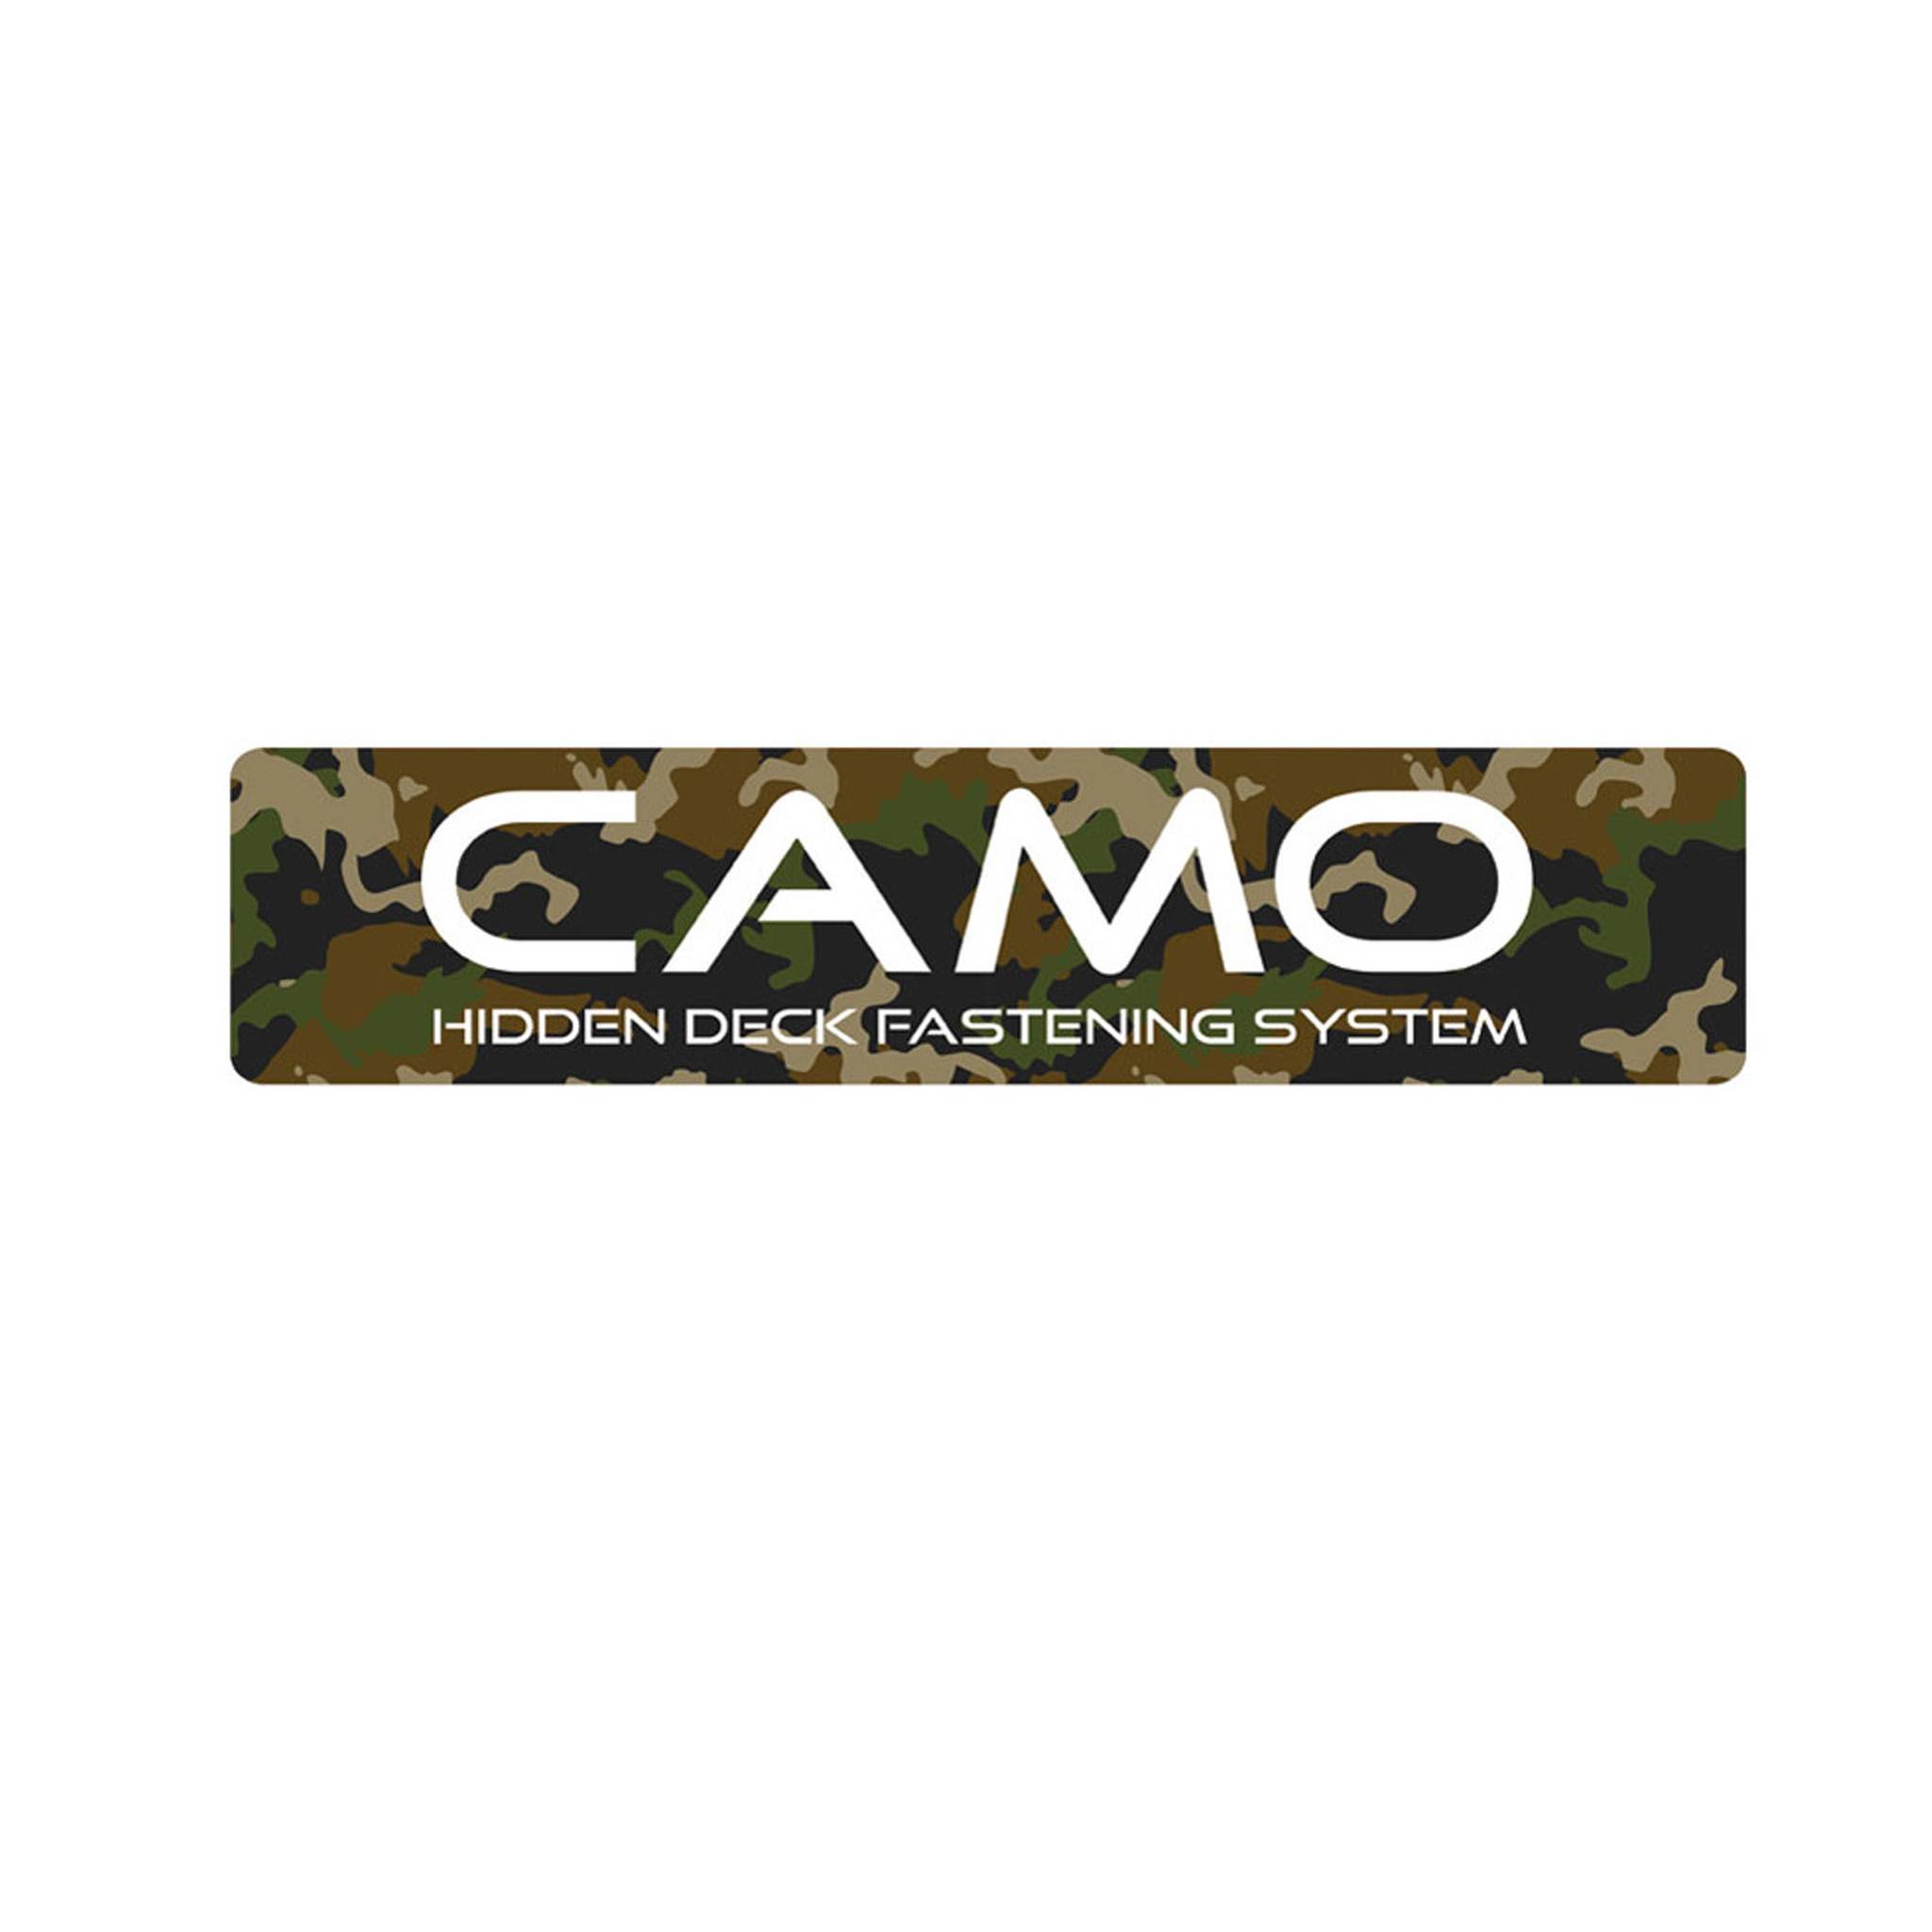 CAMO logo